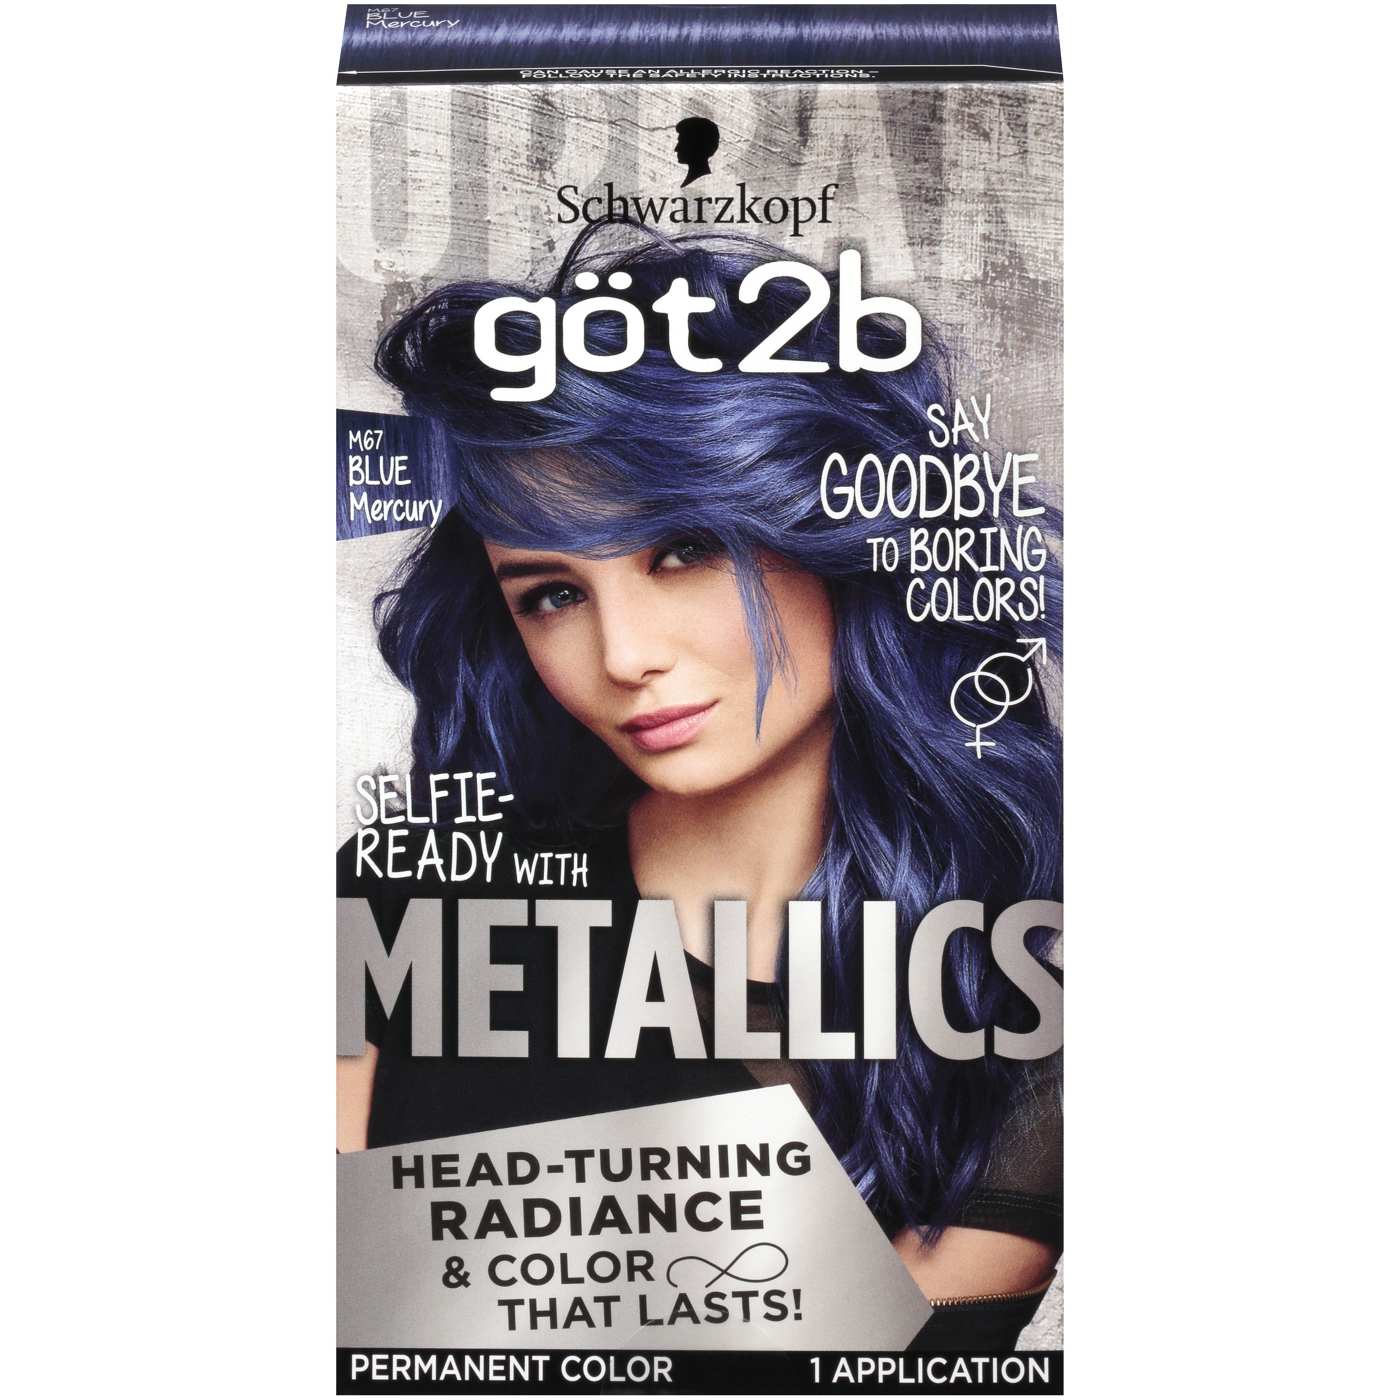 Got2b Metallics Permanent Hair Color, M67 Blue Mercury; image 1 of 4